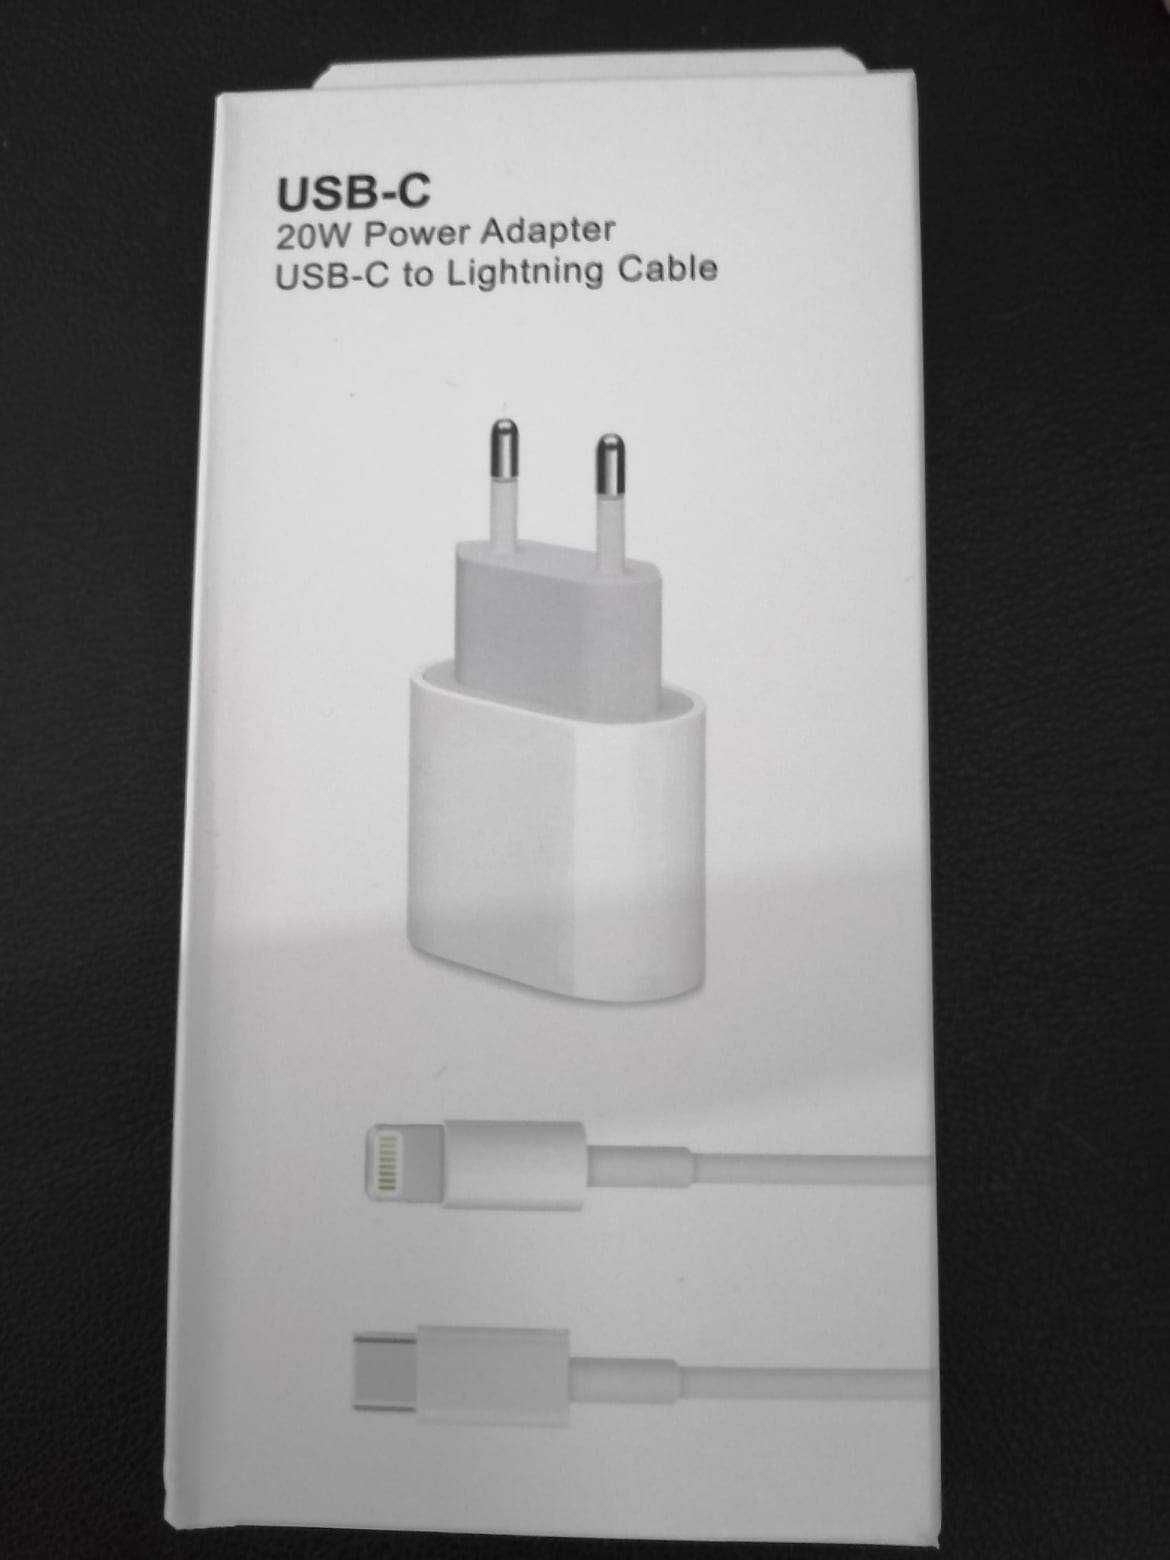 USB-C - 20W - Power Adapter